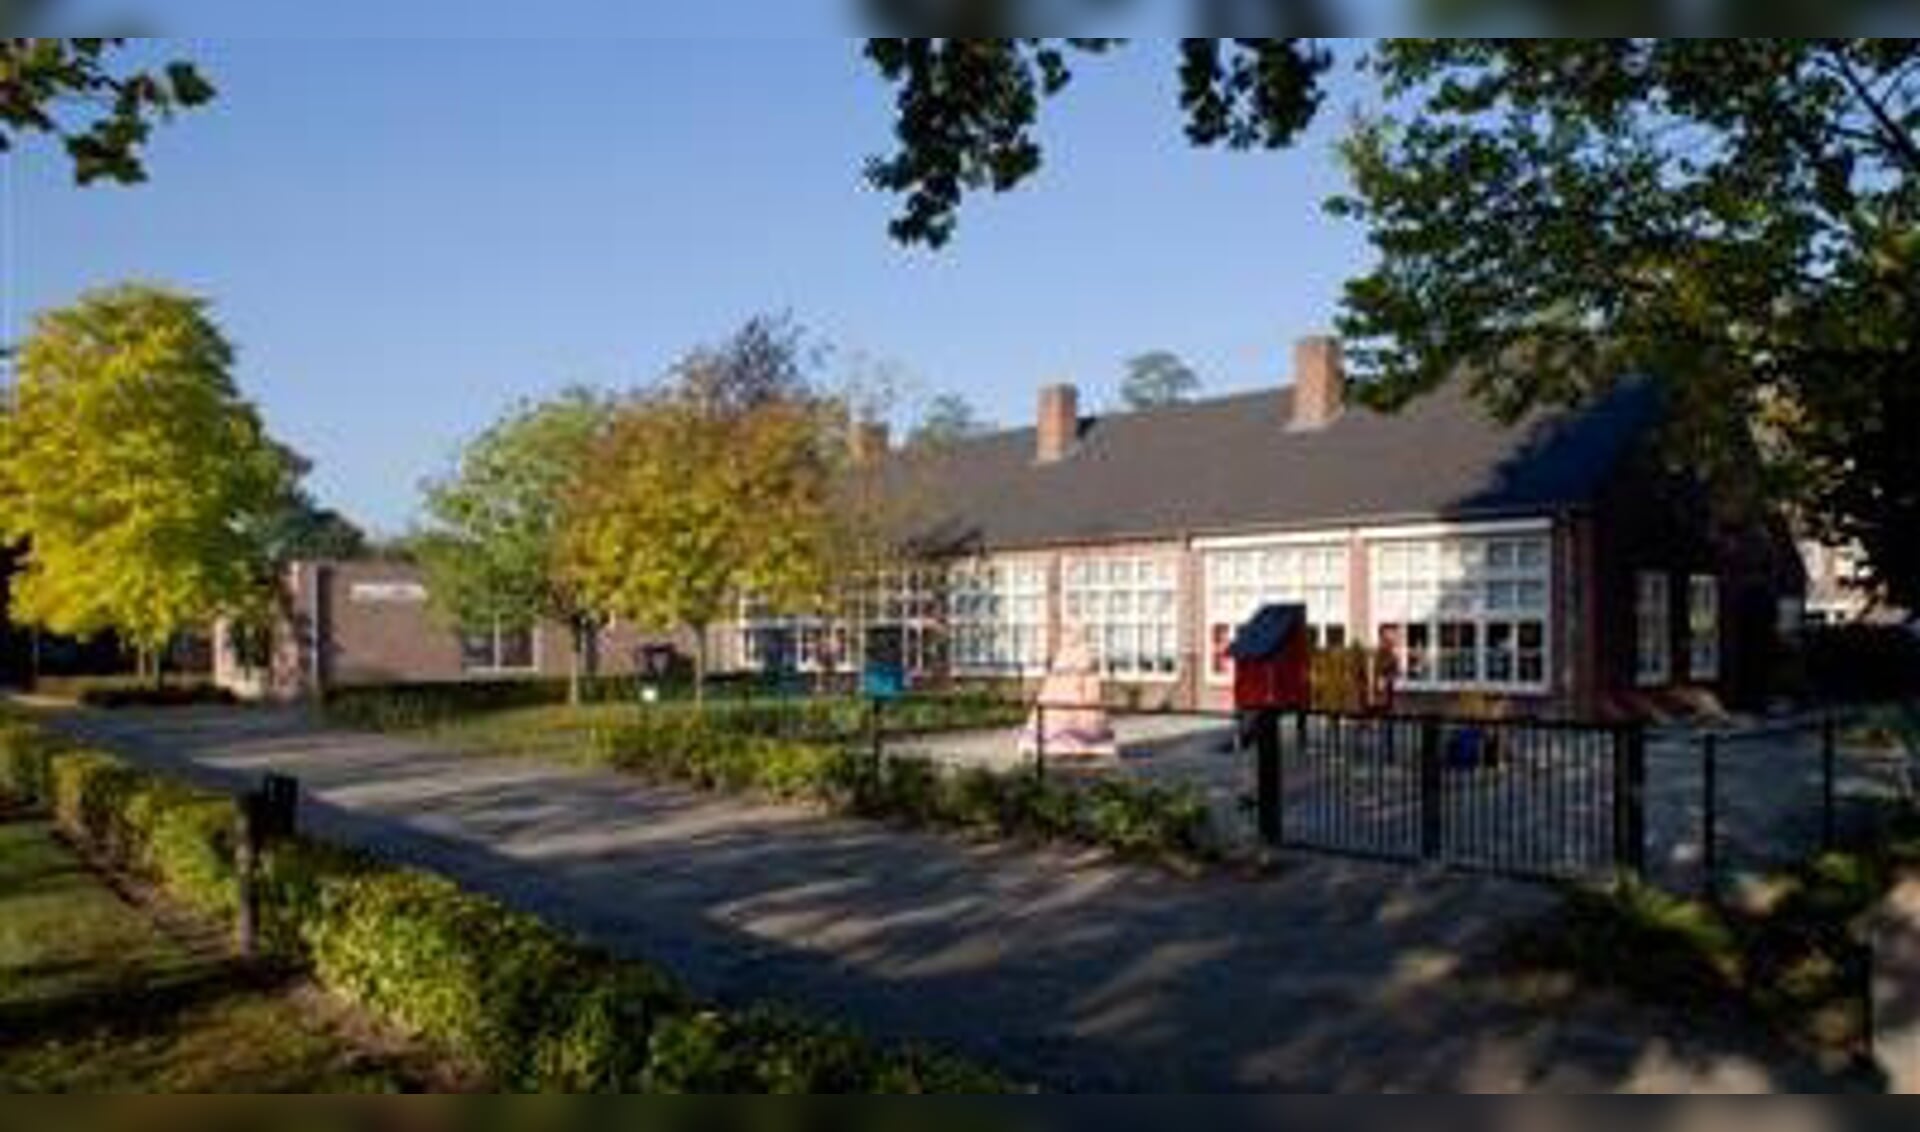 Bernadetteschool in Mariahout